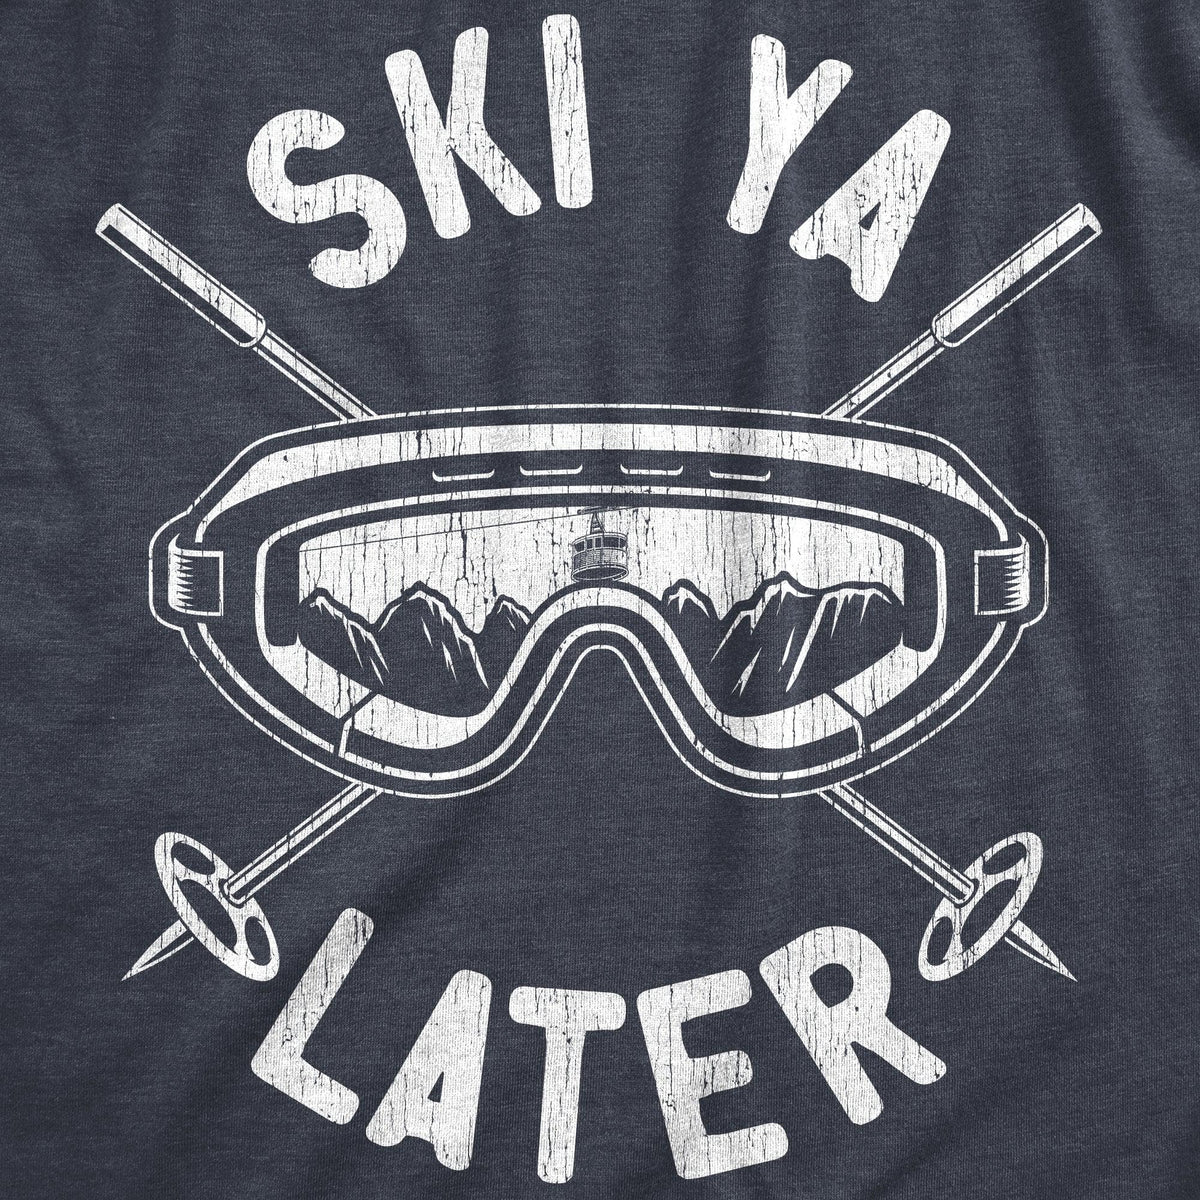 Ski Ya Later Men&#39;s Tshirt  -  Crazy Dog T-Shirts